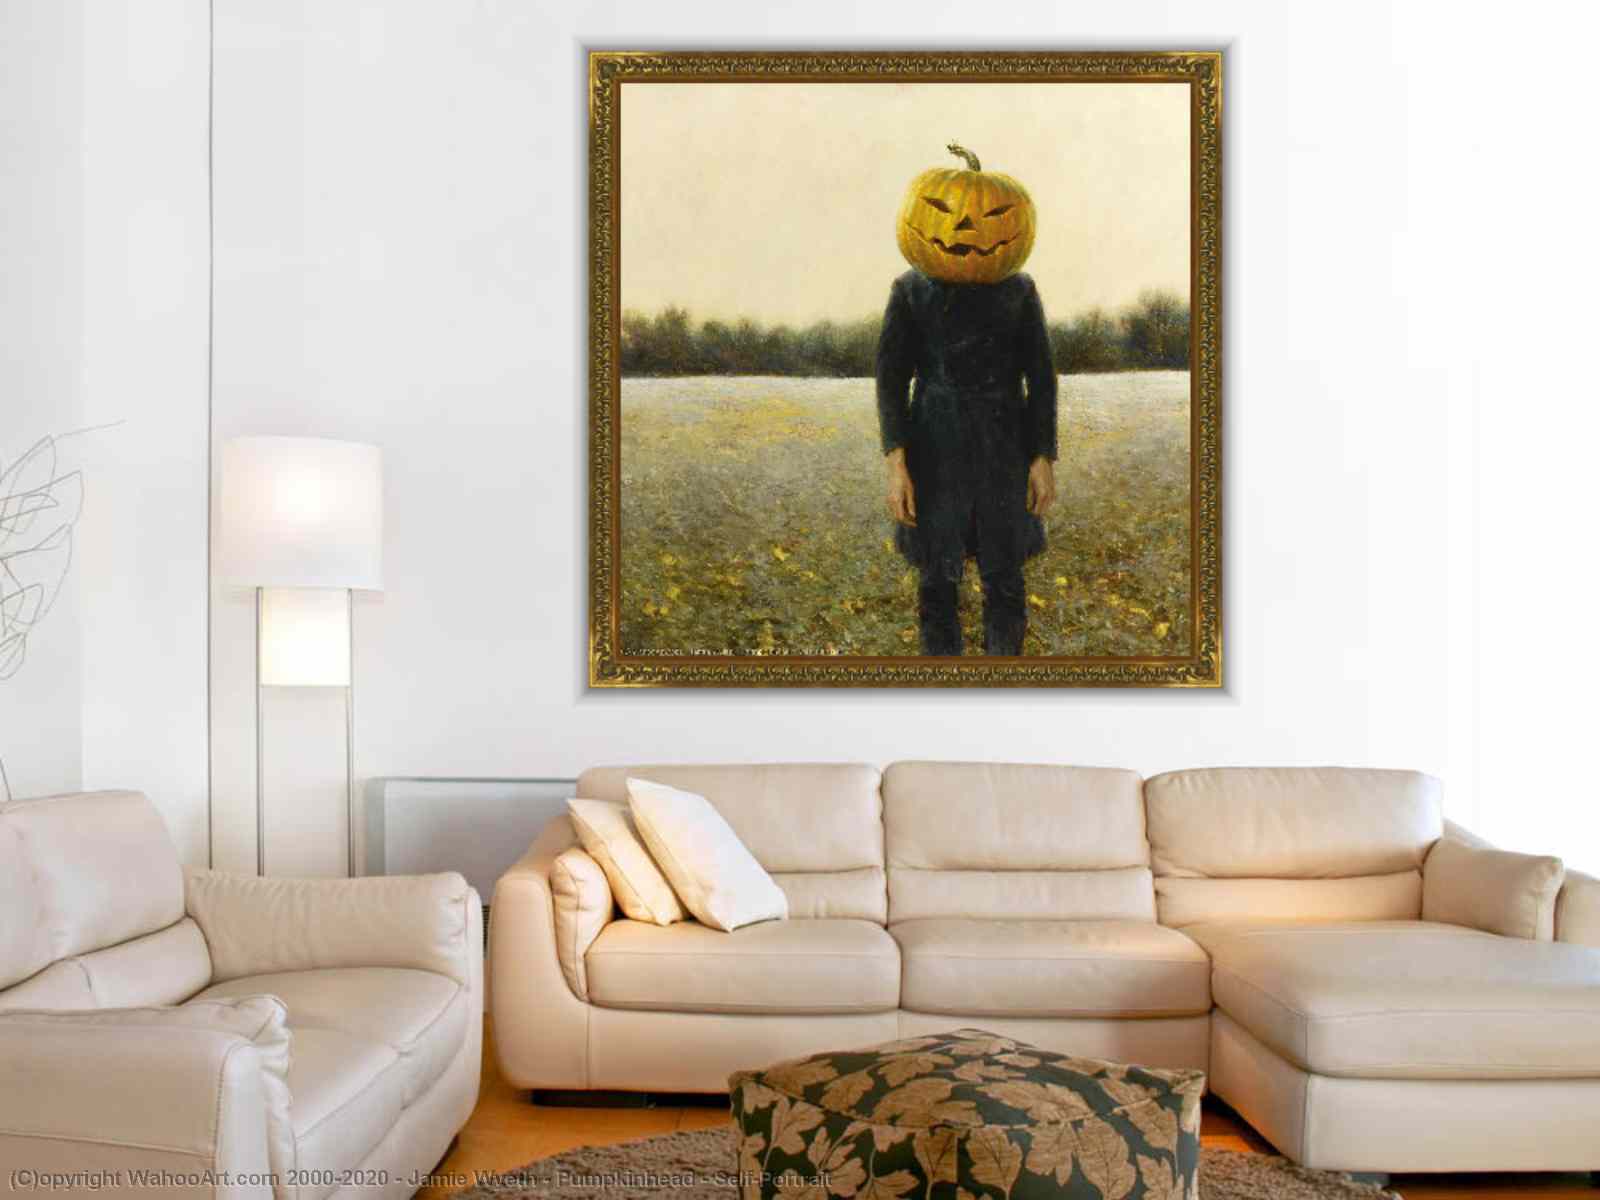 Pumpkin Head - Focus On Jamie Wyeth